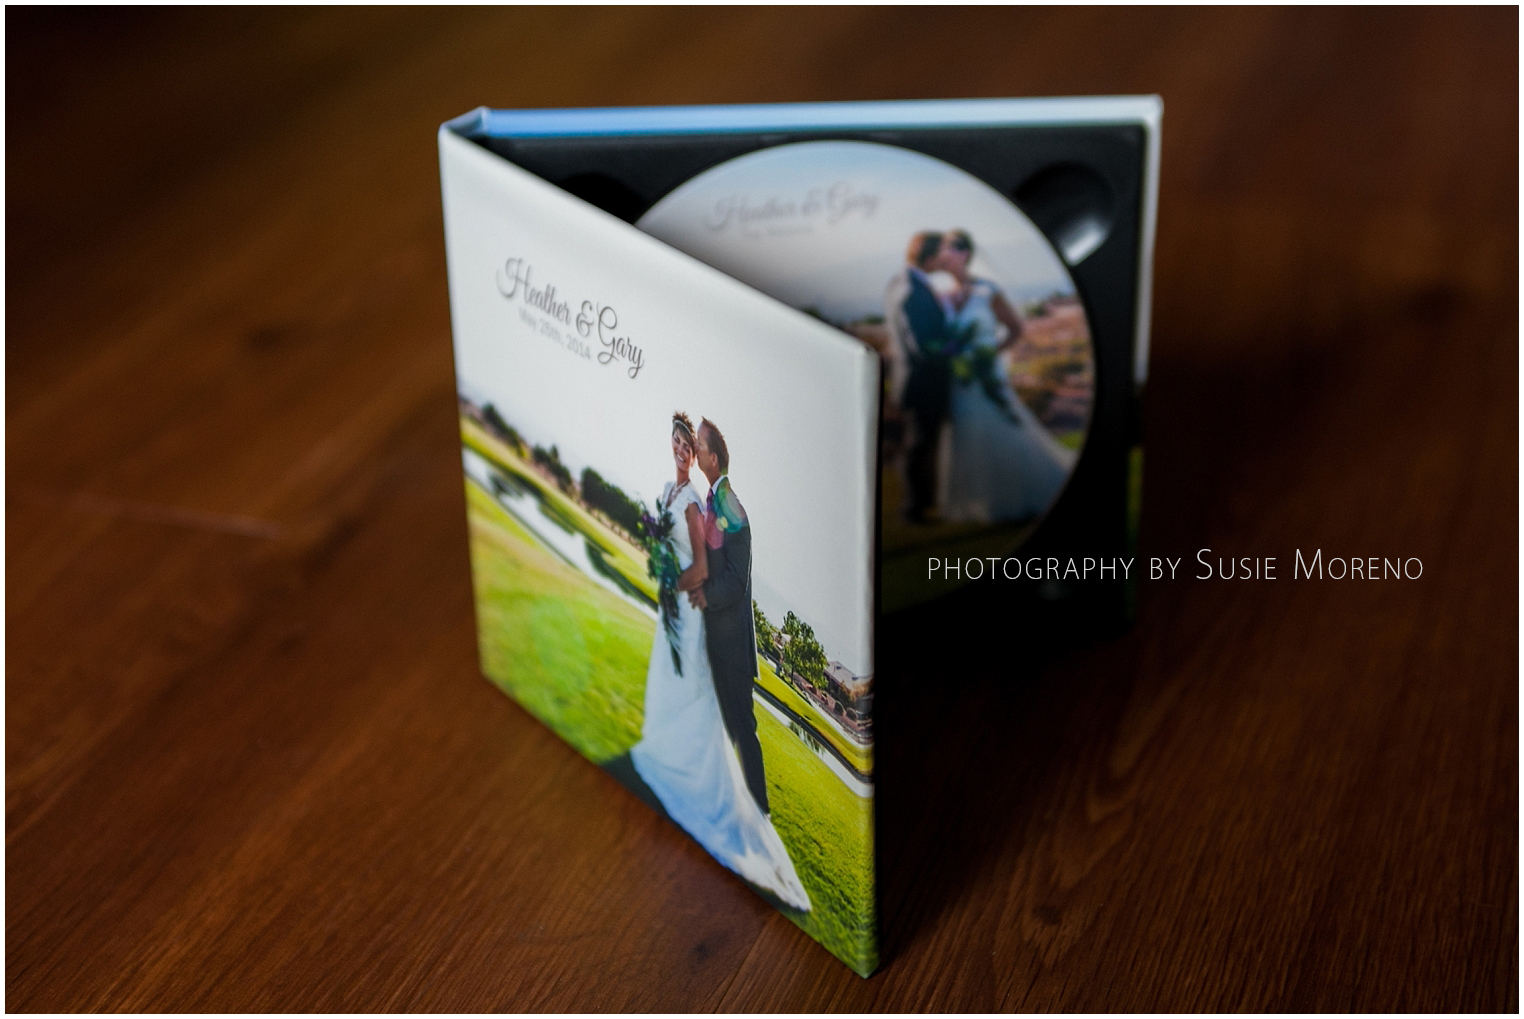 Custom CD Cases - Susie Moreno Photography